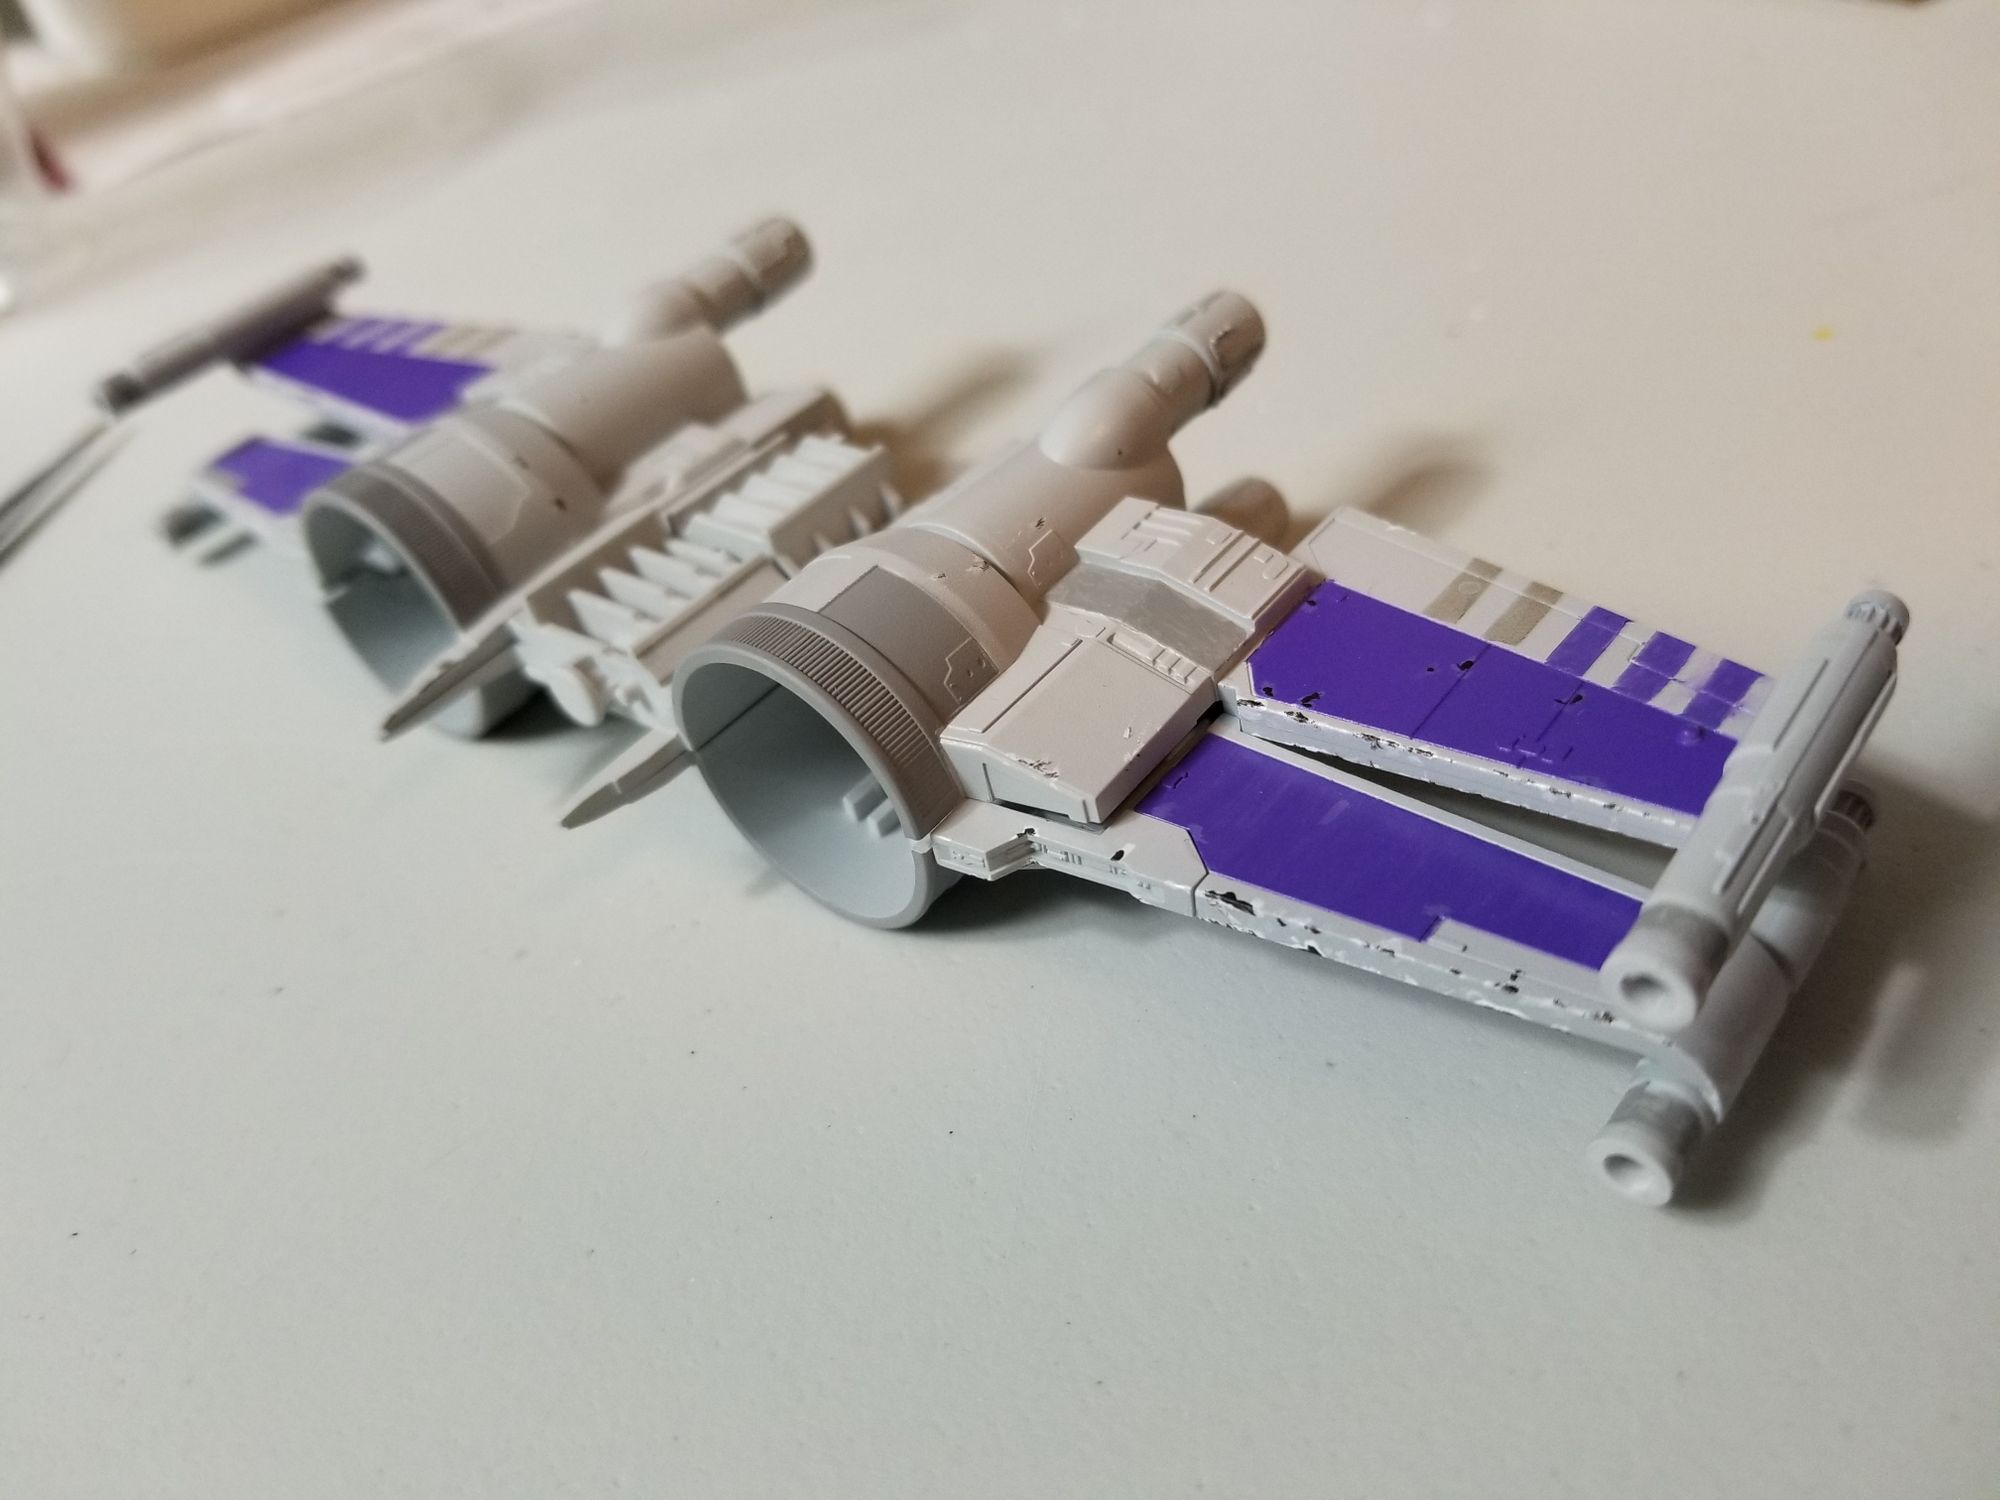 Build Log: Purple X-wing